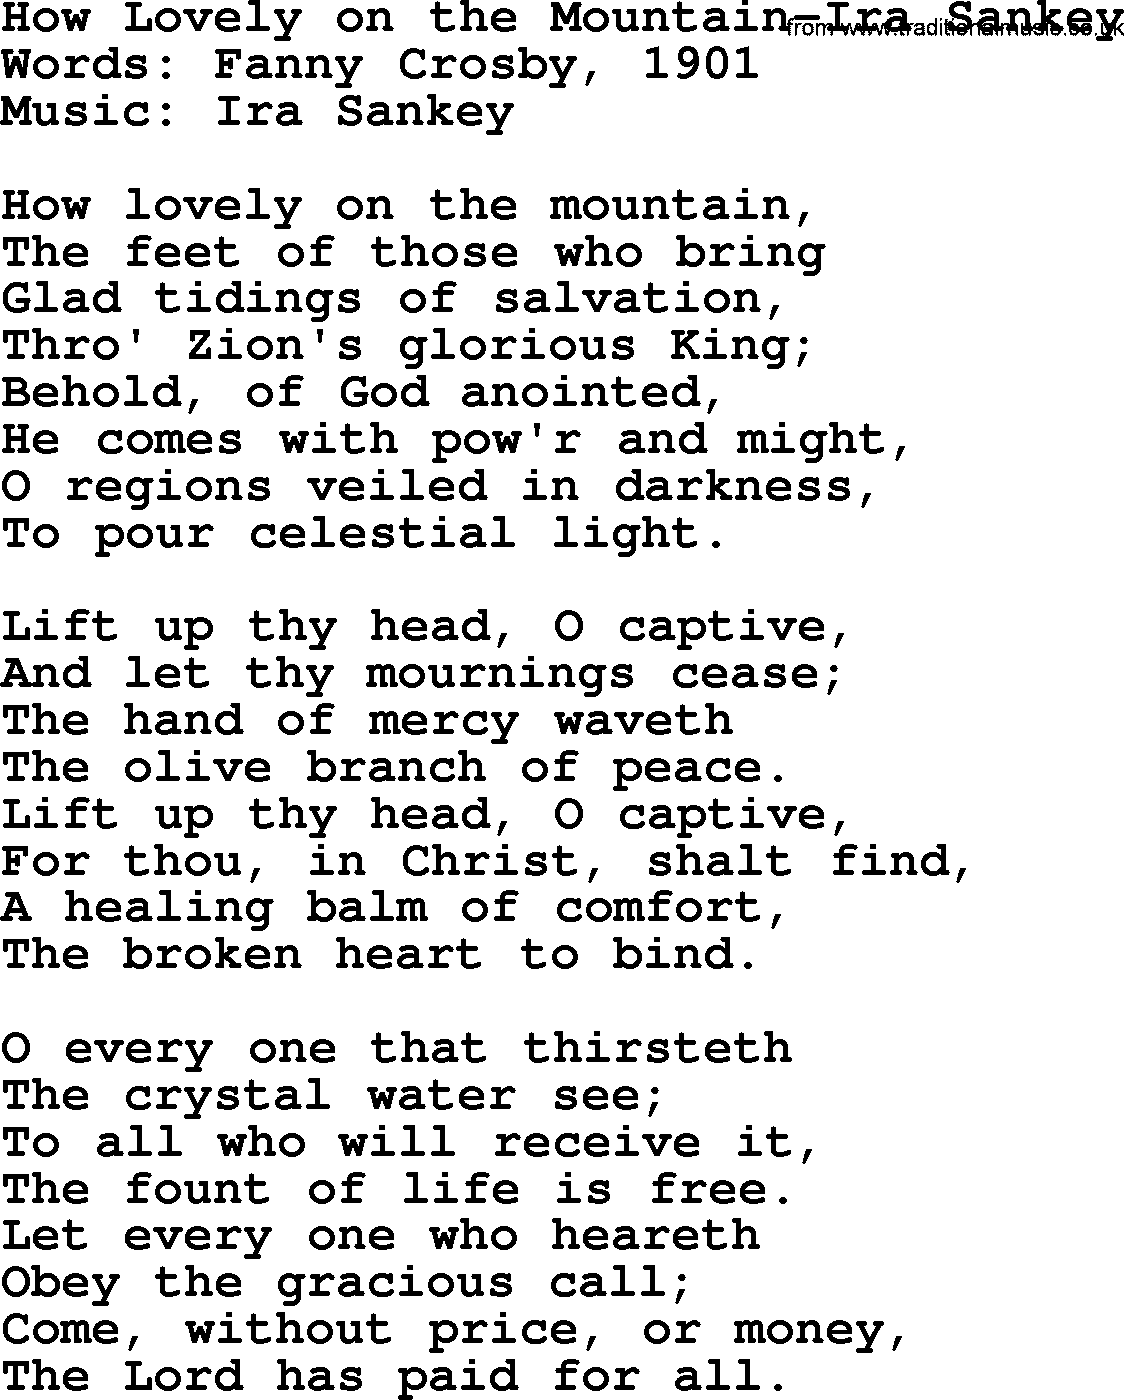 Ira Sankey hymn: How Lovely on the Mountain-Ira Sankey, lyrics